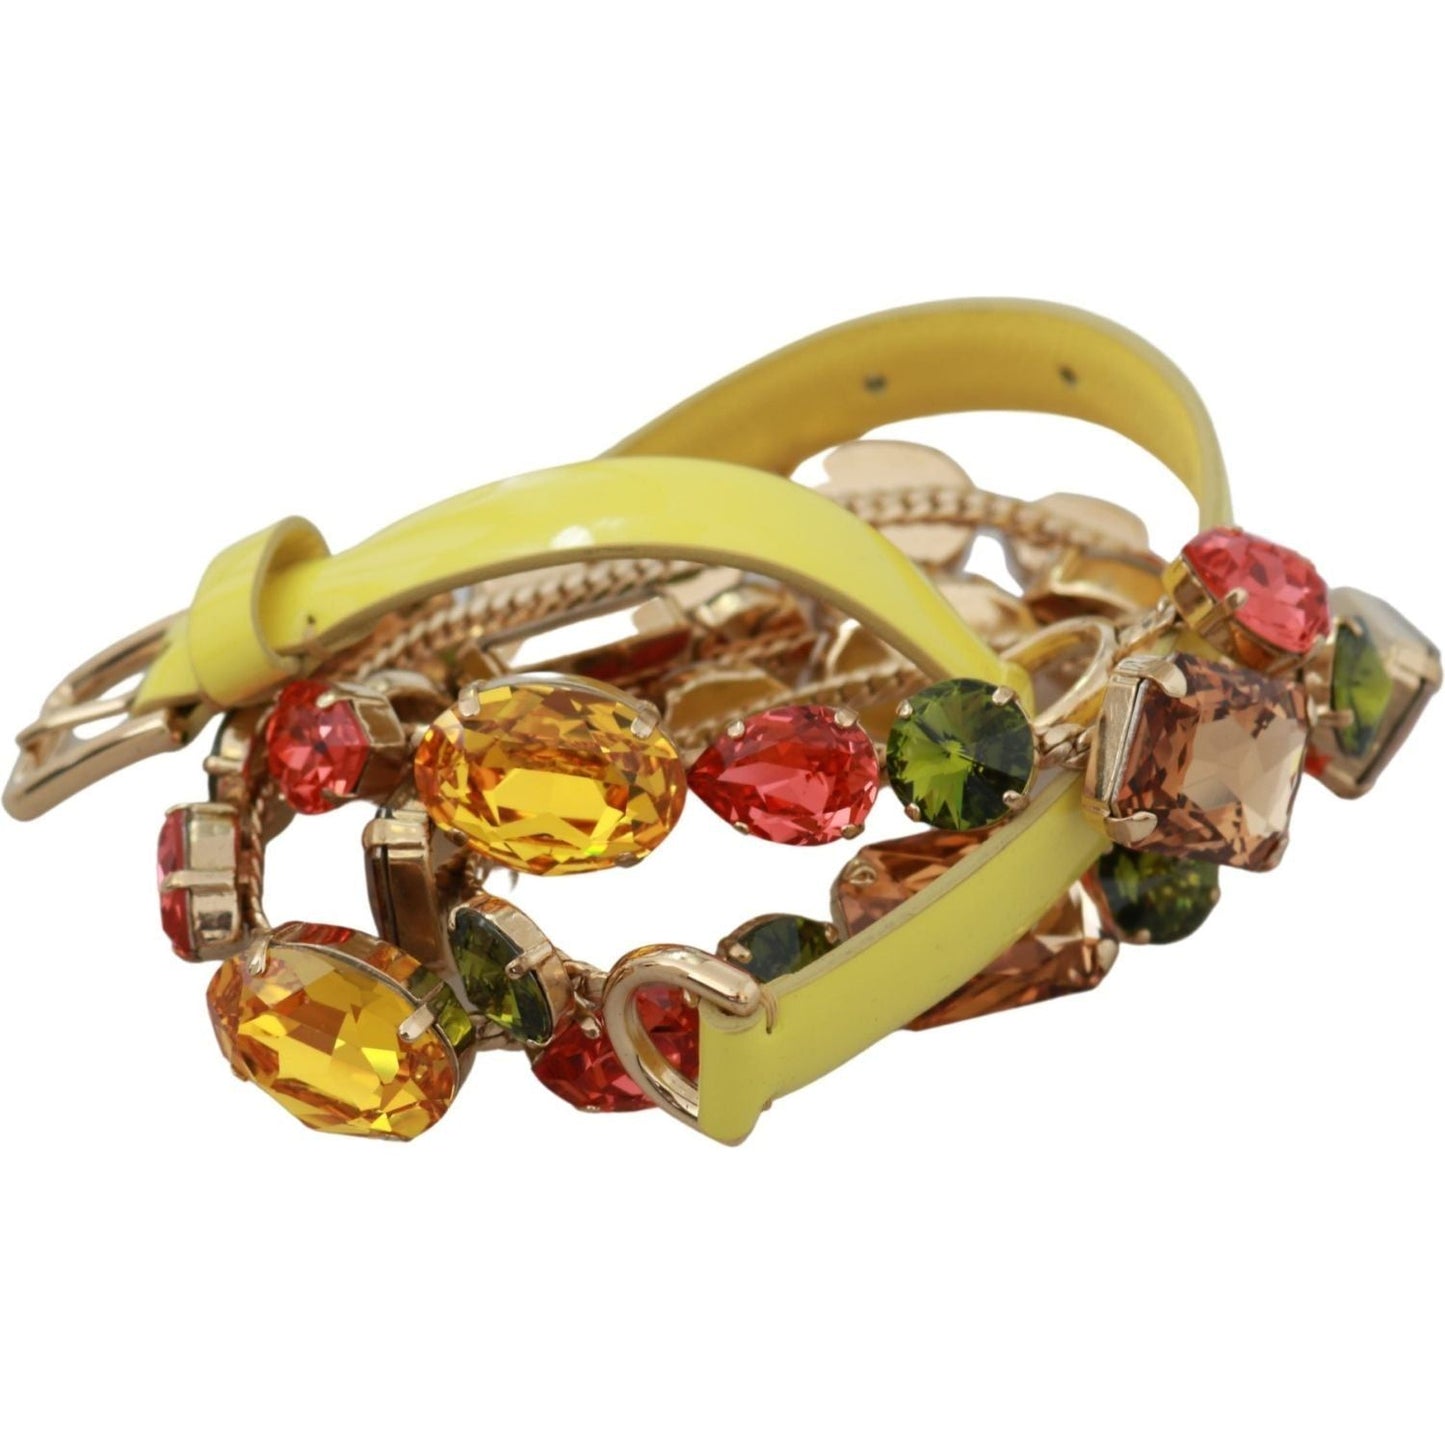 Dolce & Gabbana Stunning Crystal-Embellished Leather Belt Belt yellow-gold-multicolor-crystals-waist-belt IMG_9964-scaled-5dafae07-5d8.jpg